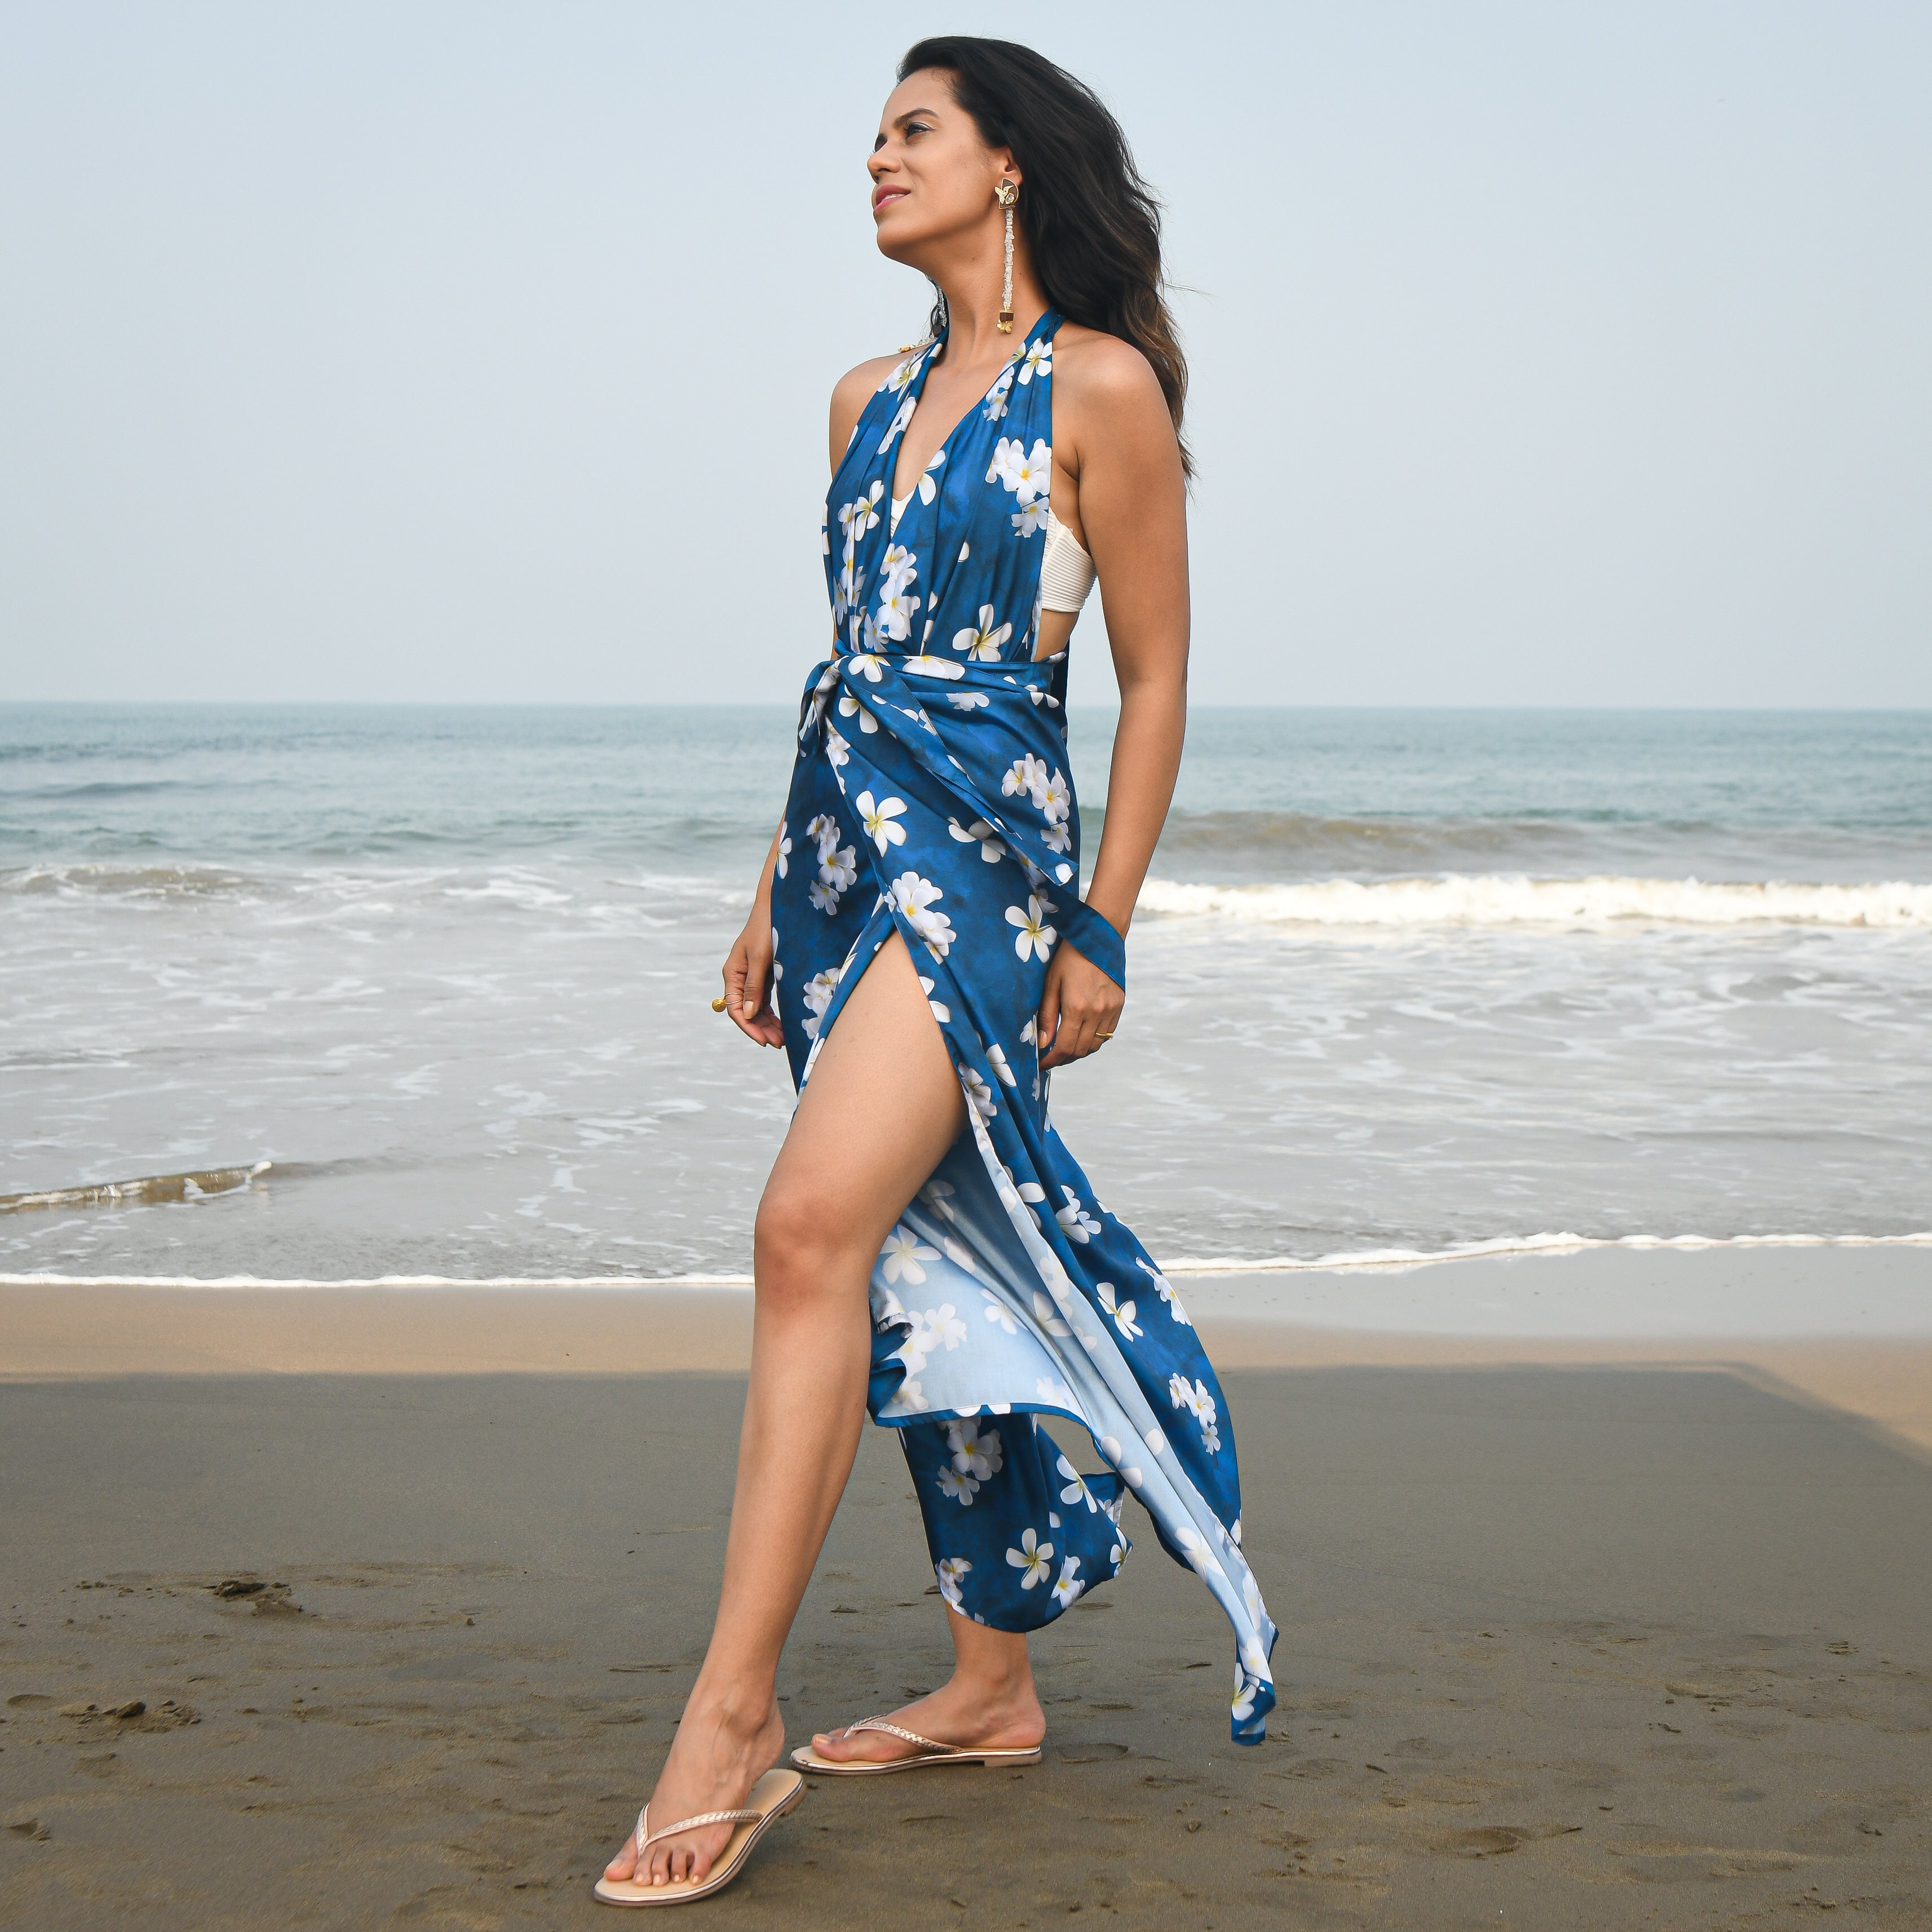 Buy Resort Wear For Women Online, Vacation Dresses For Women